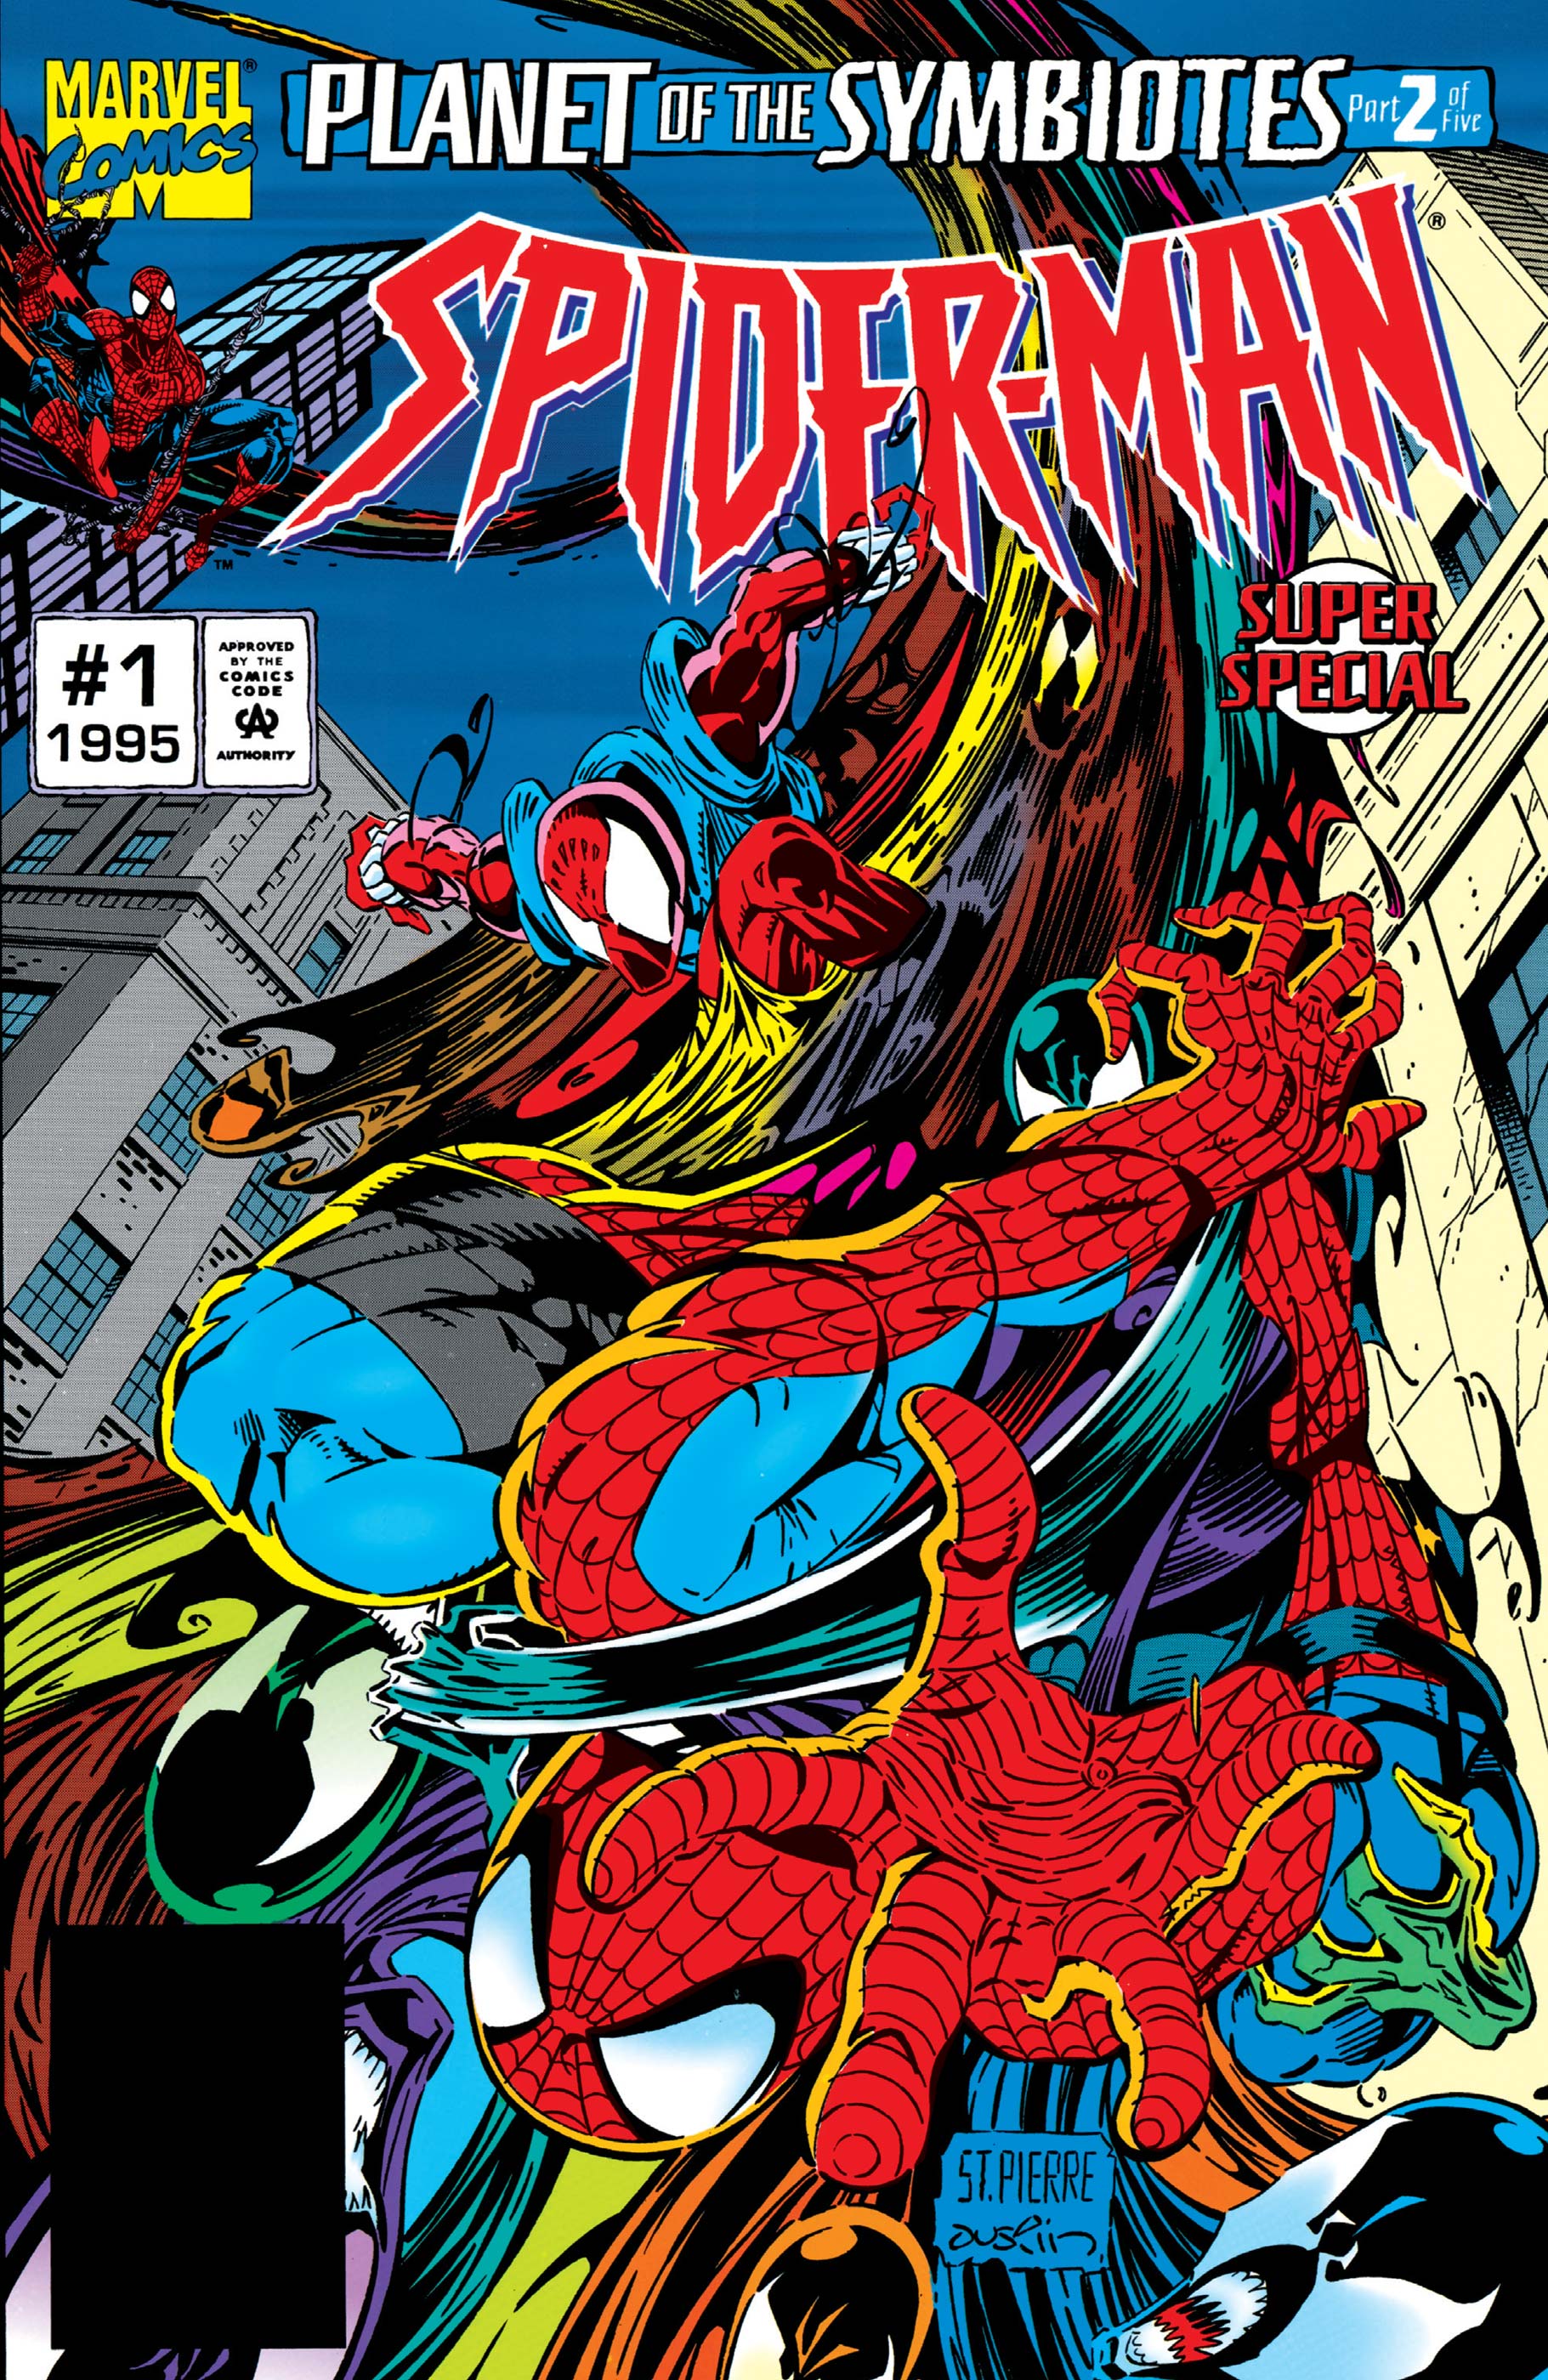 Spider-Man Super Special (1995) #1